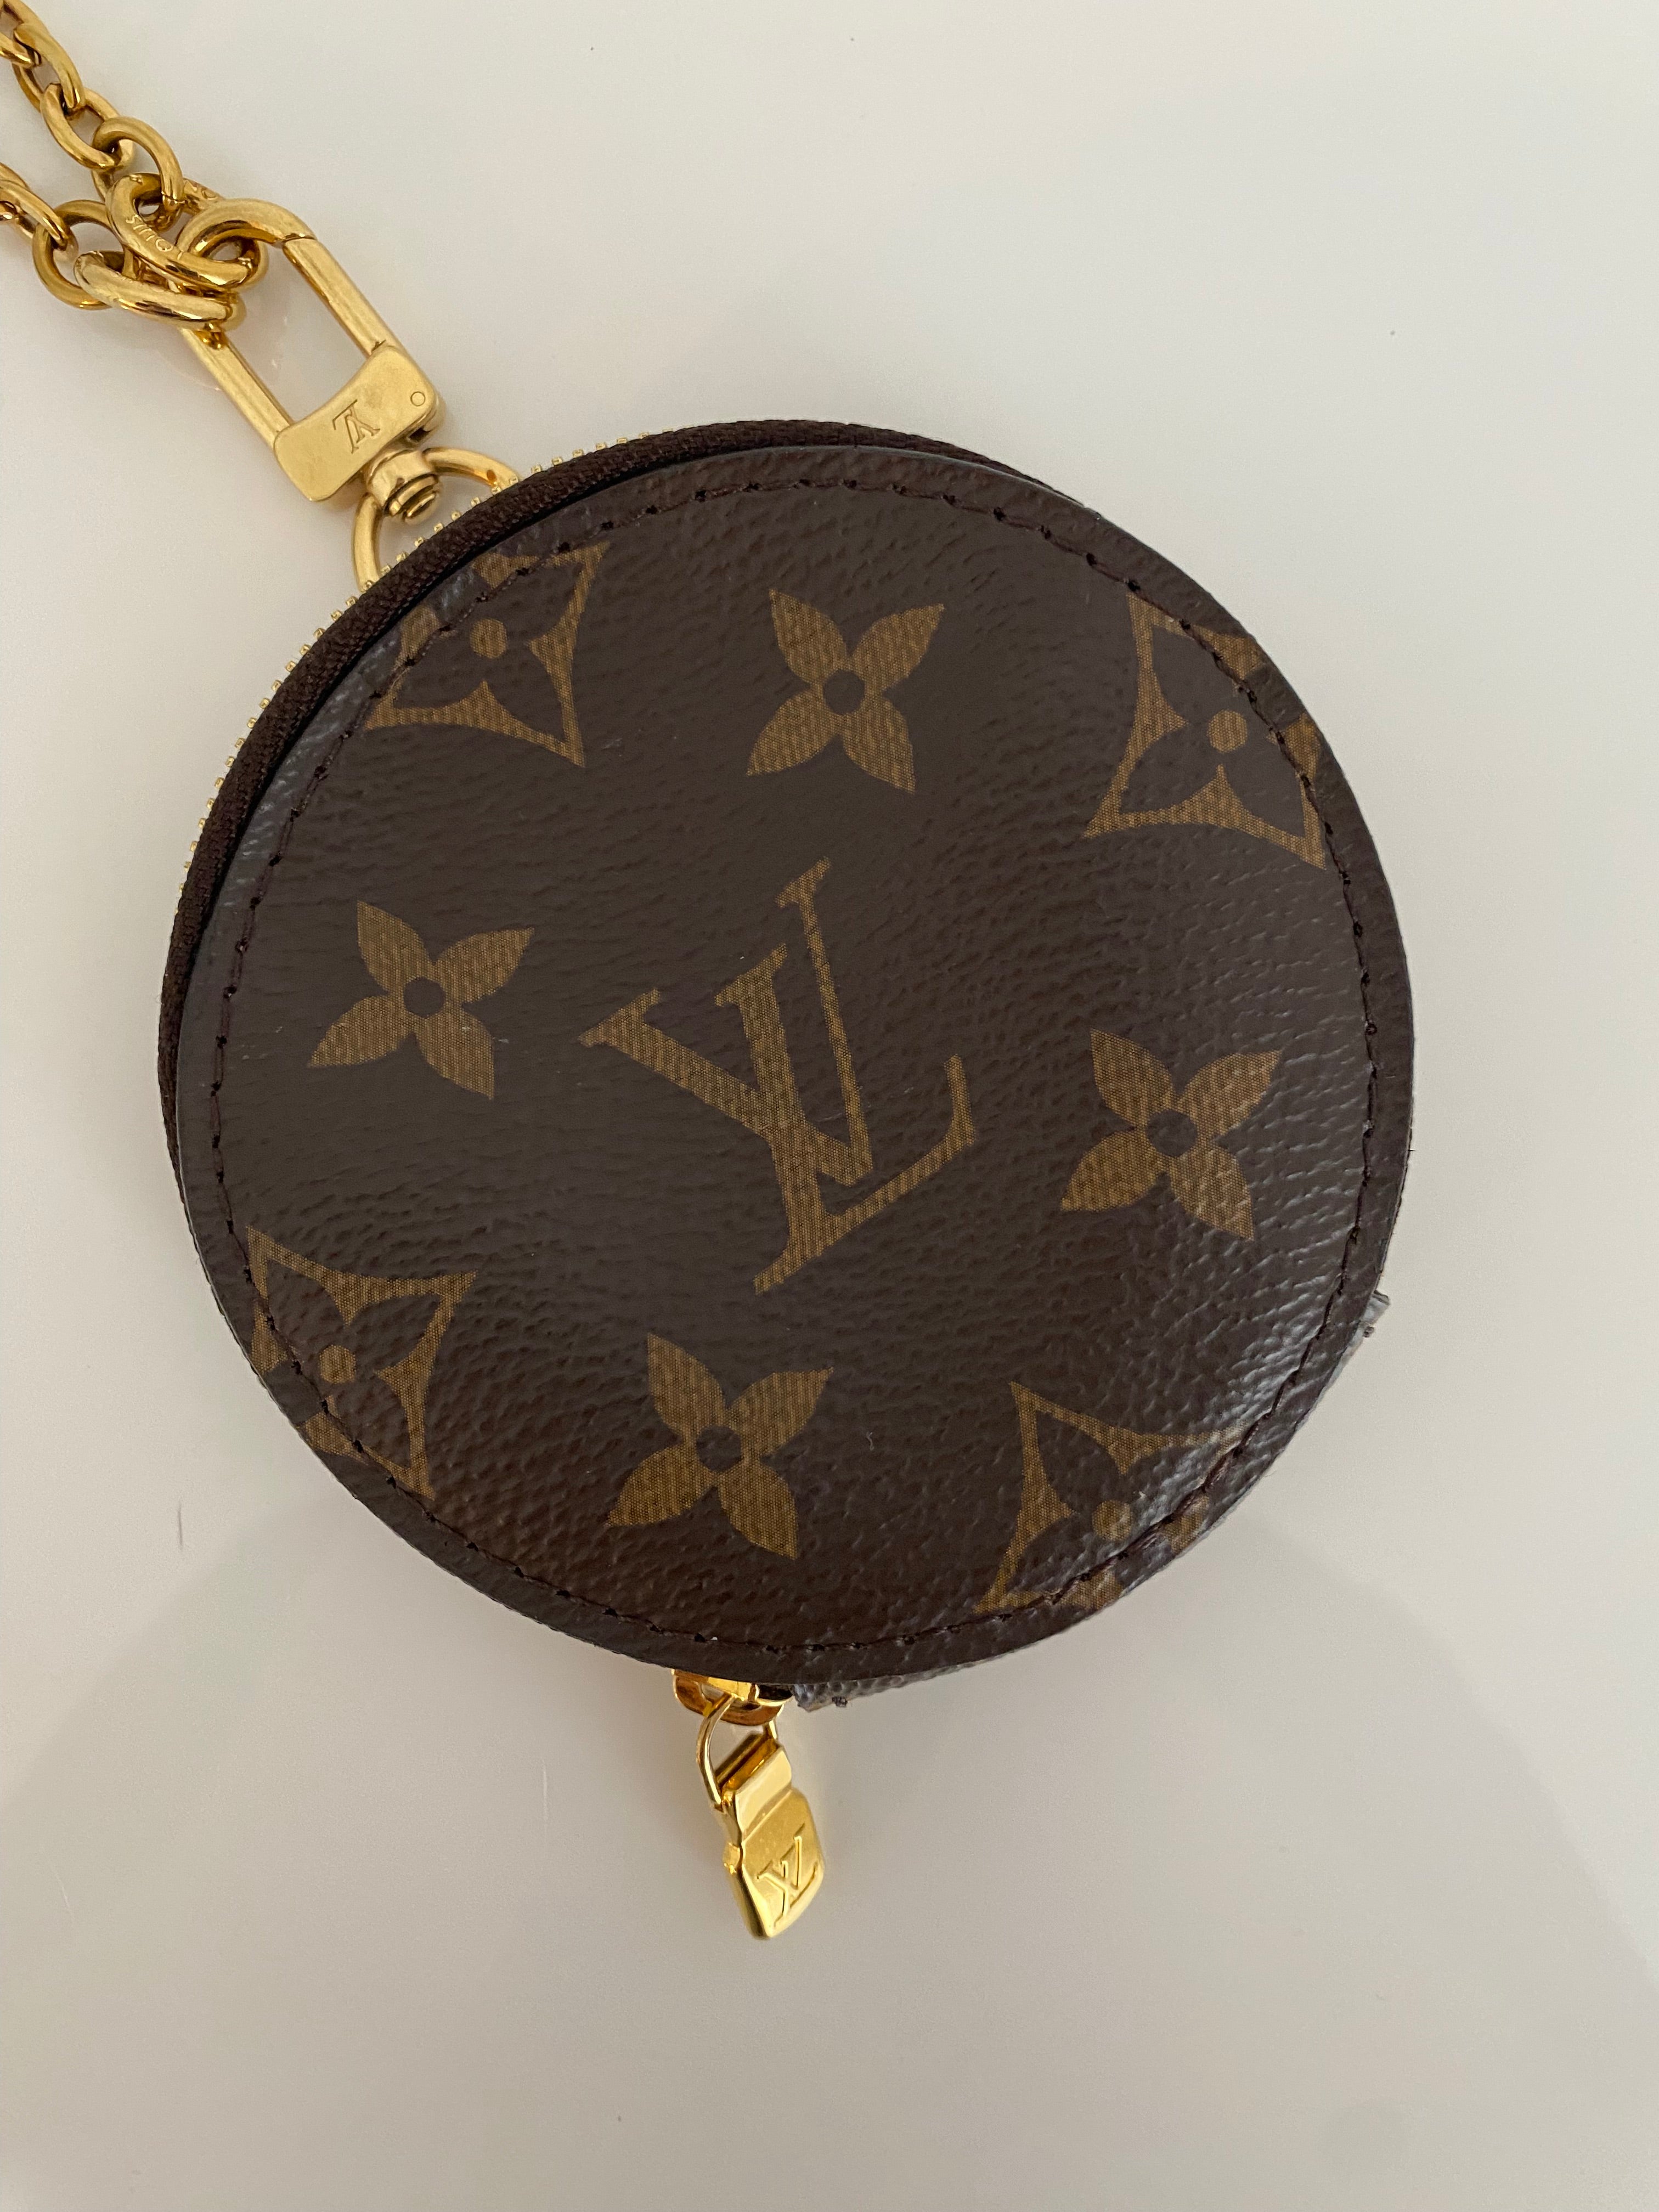 Louis Vuitton Pochette Metis Archives - Classy Yet Trendy